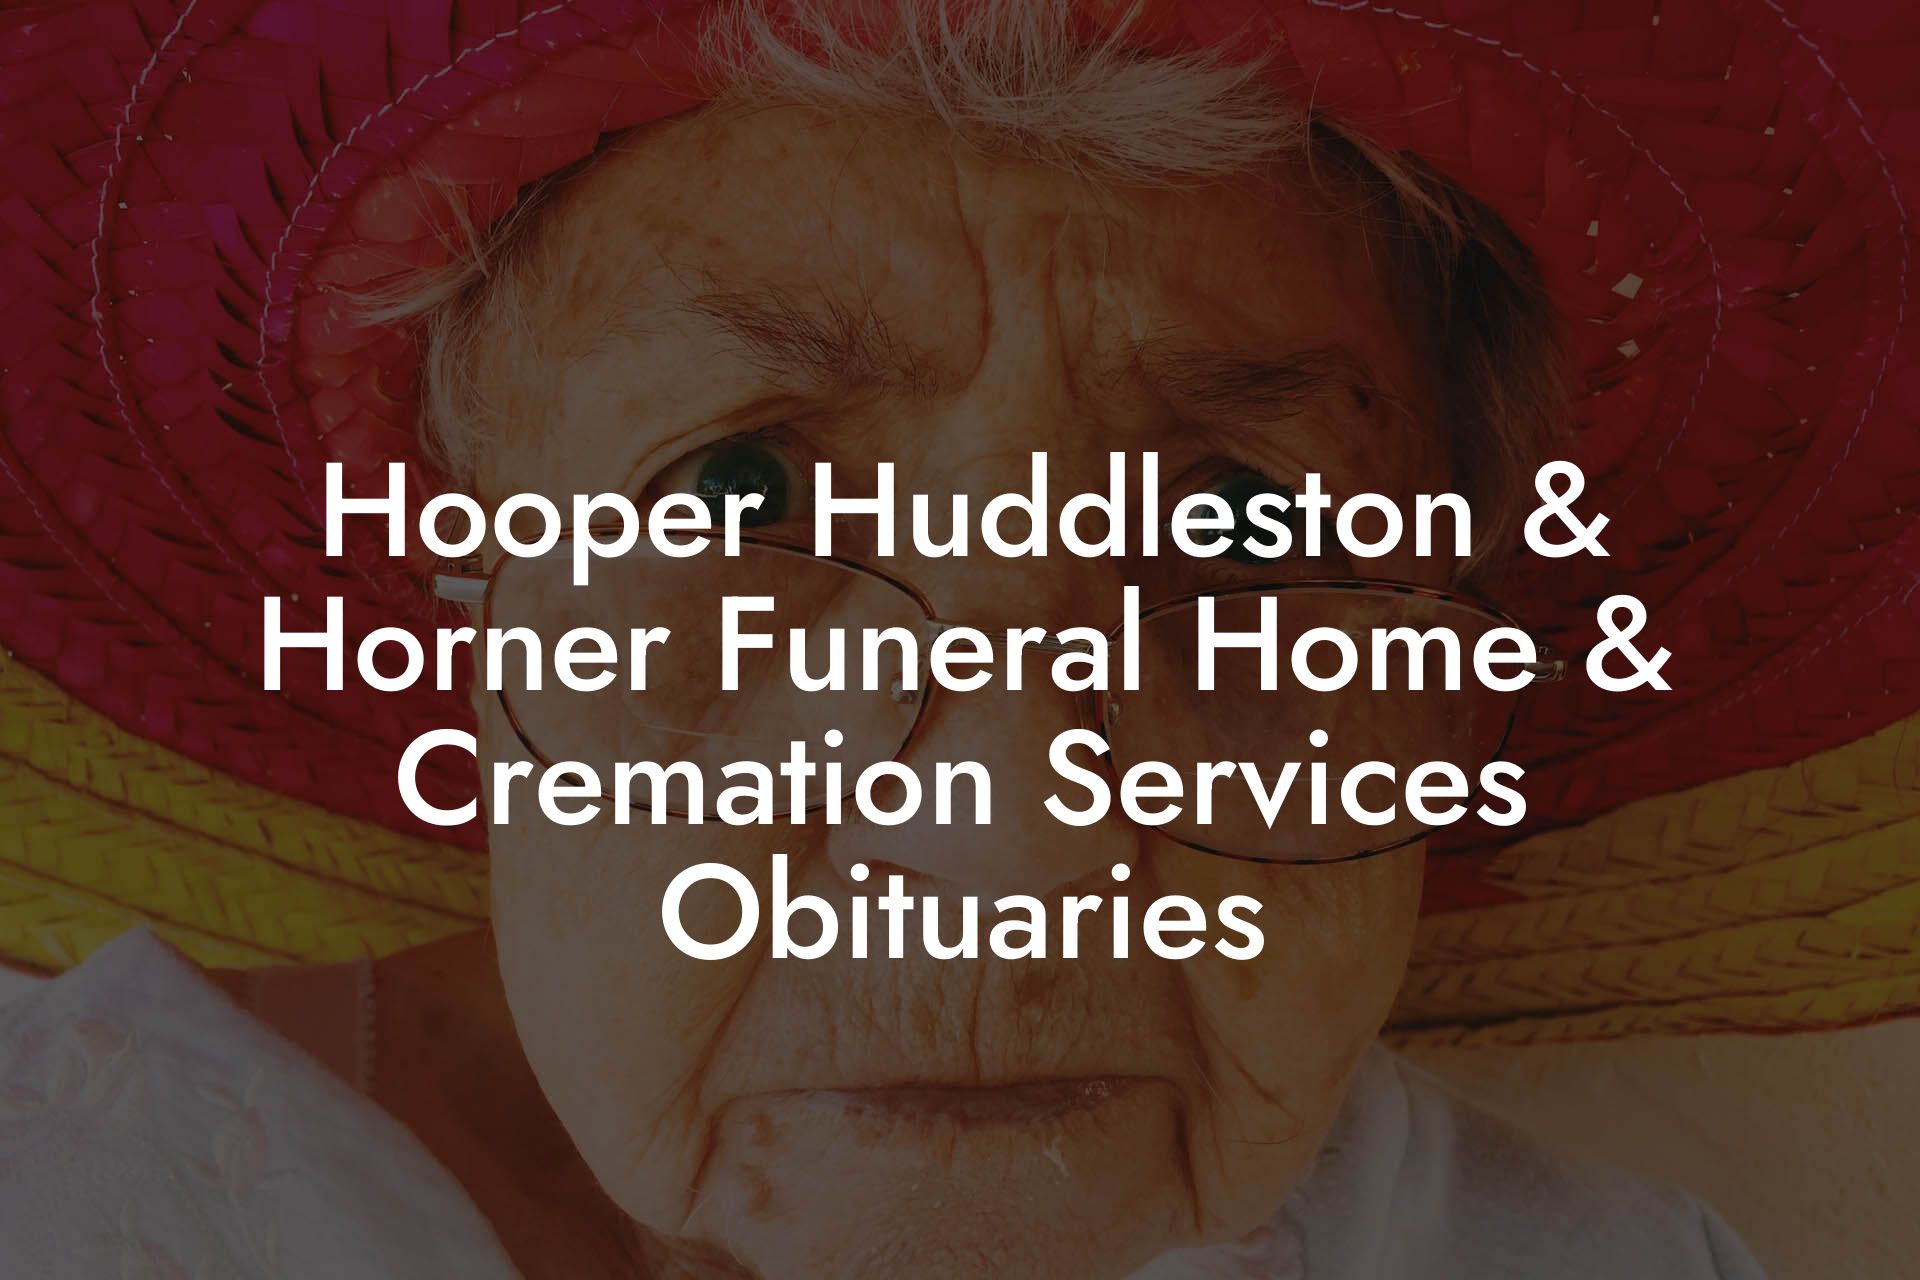 Hooper Huddleston & Horner Funeral Home & Cremation Services Obituaries